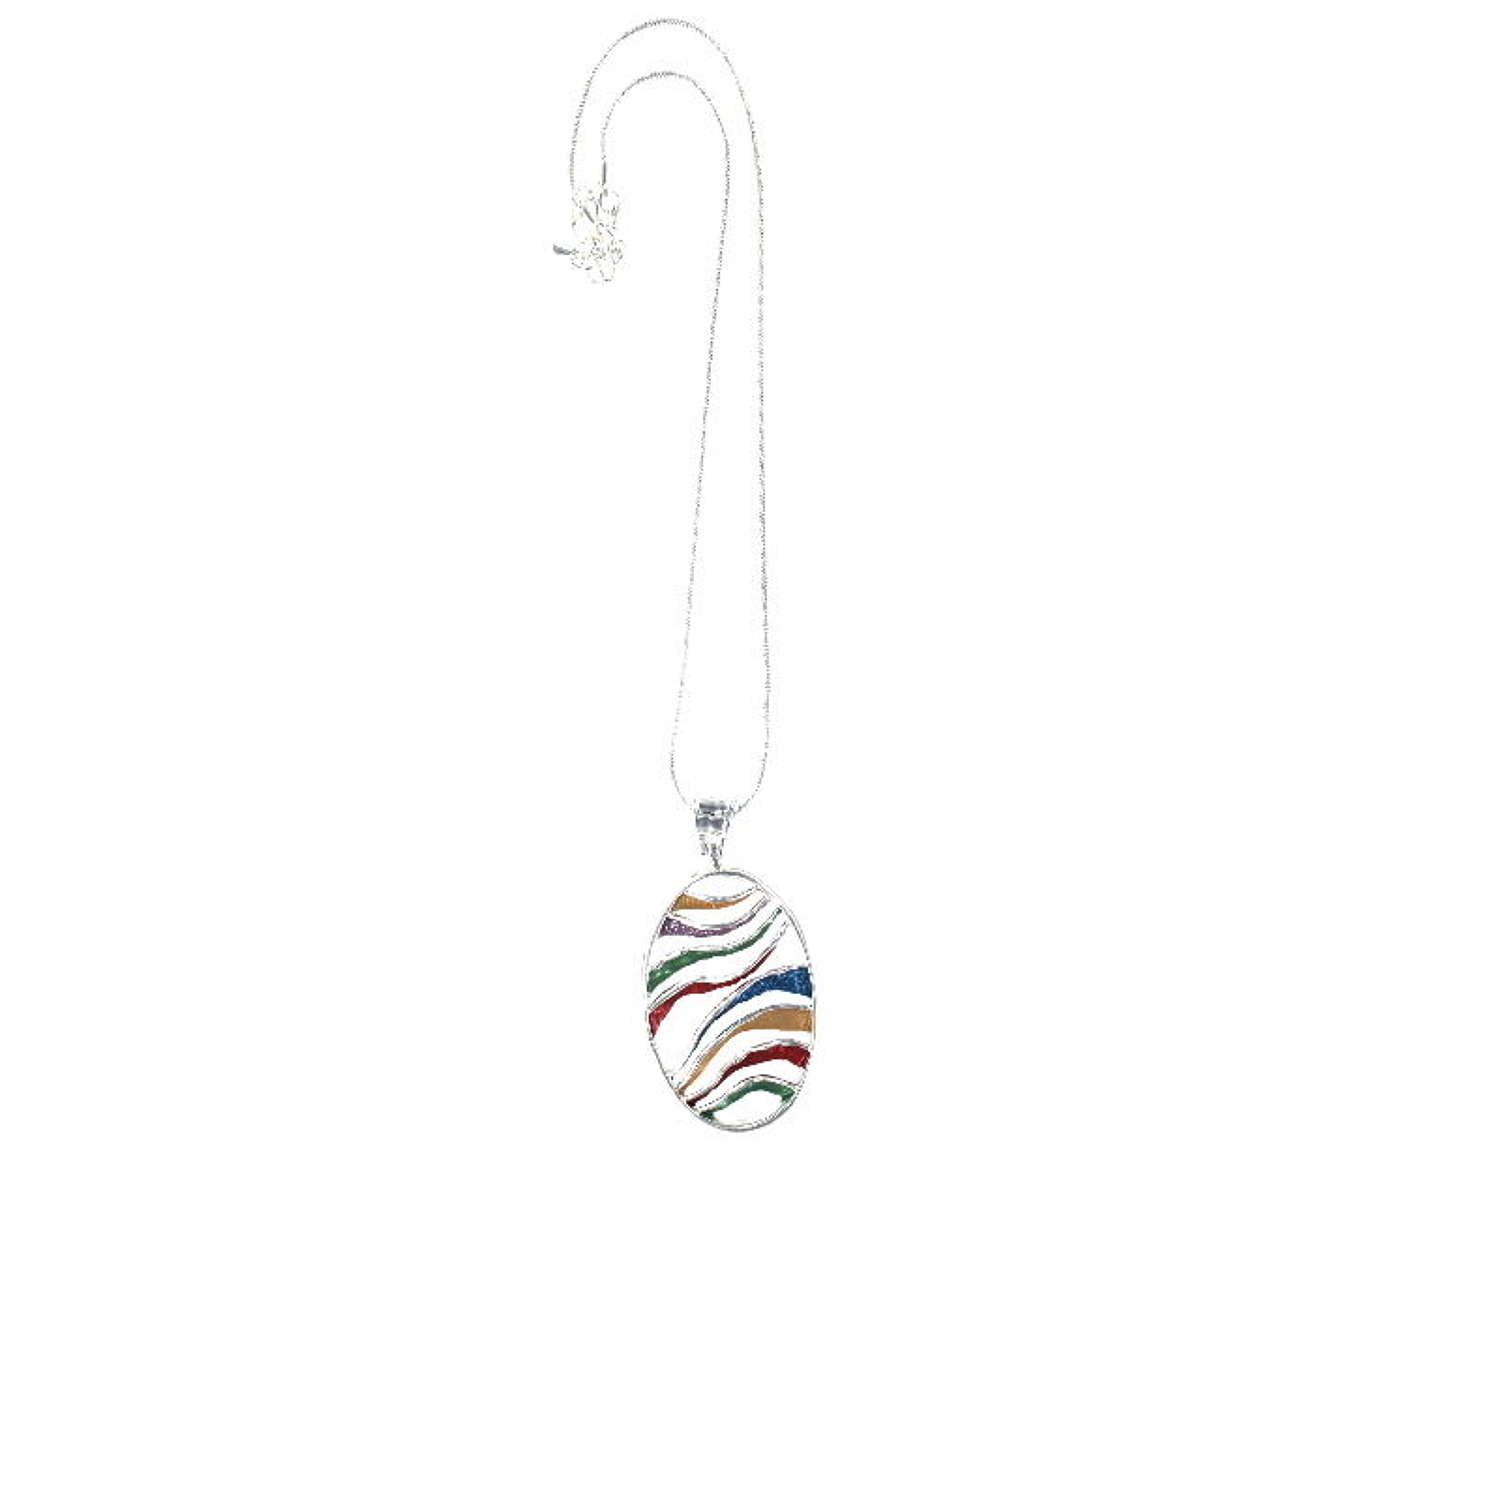 Colourful enamel pendant on silver tone snake chain.